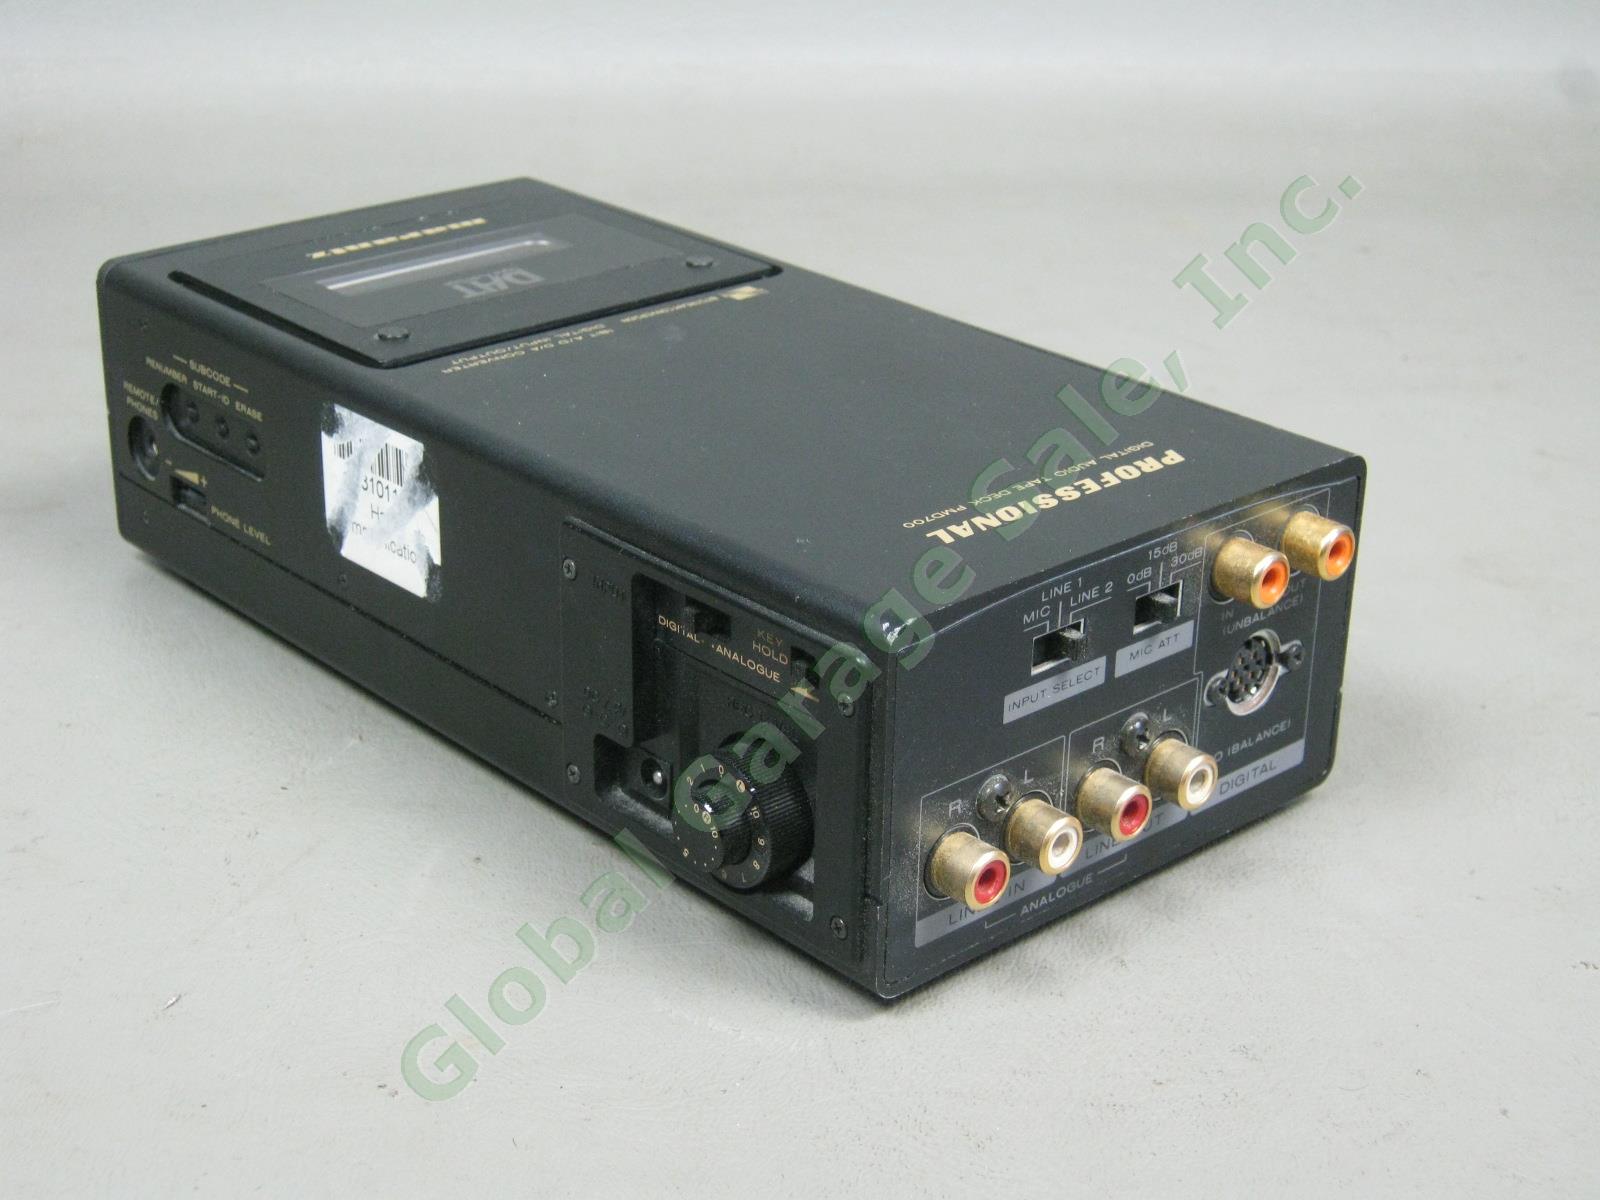 Marantz PMD700 Professional DAT Digital Audio Tape Deck Recorder +AC Adapter Lot 3